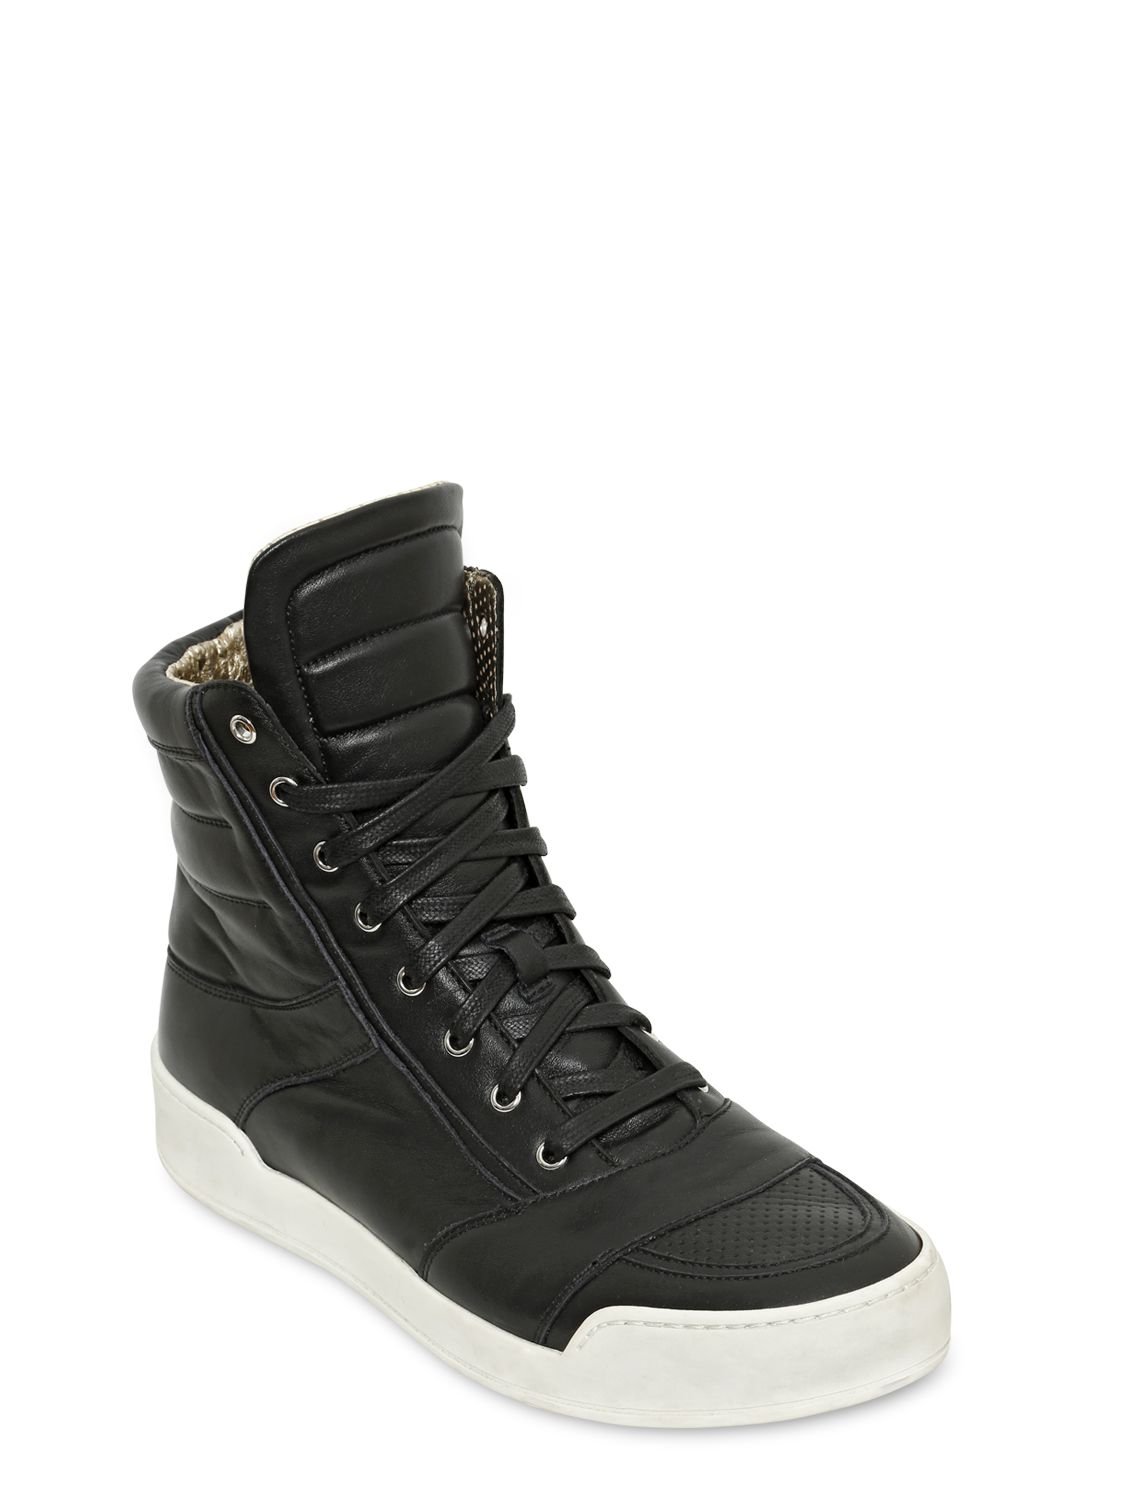 Balmain Leather High Top Sneakers in Black for Men | Lyst